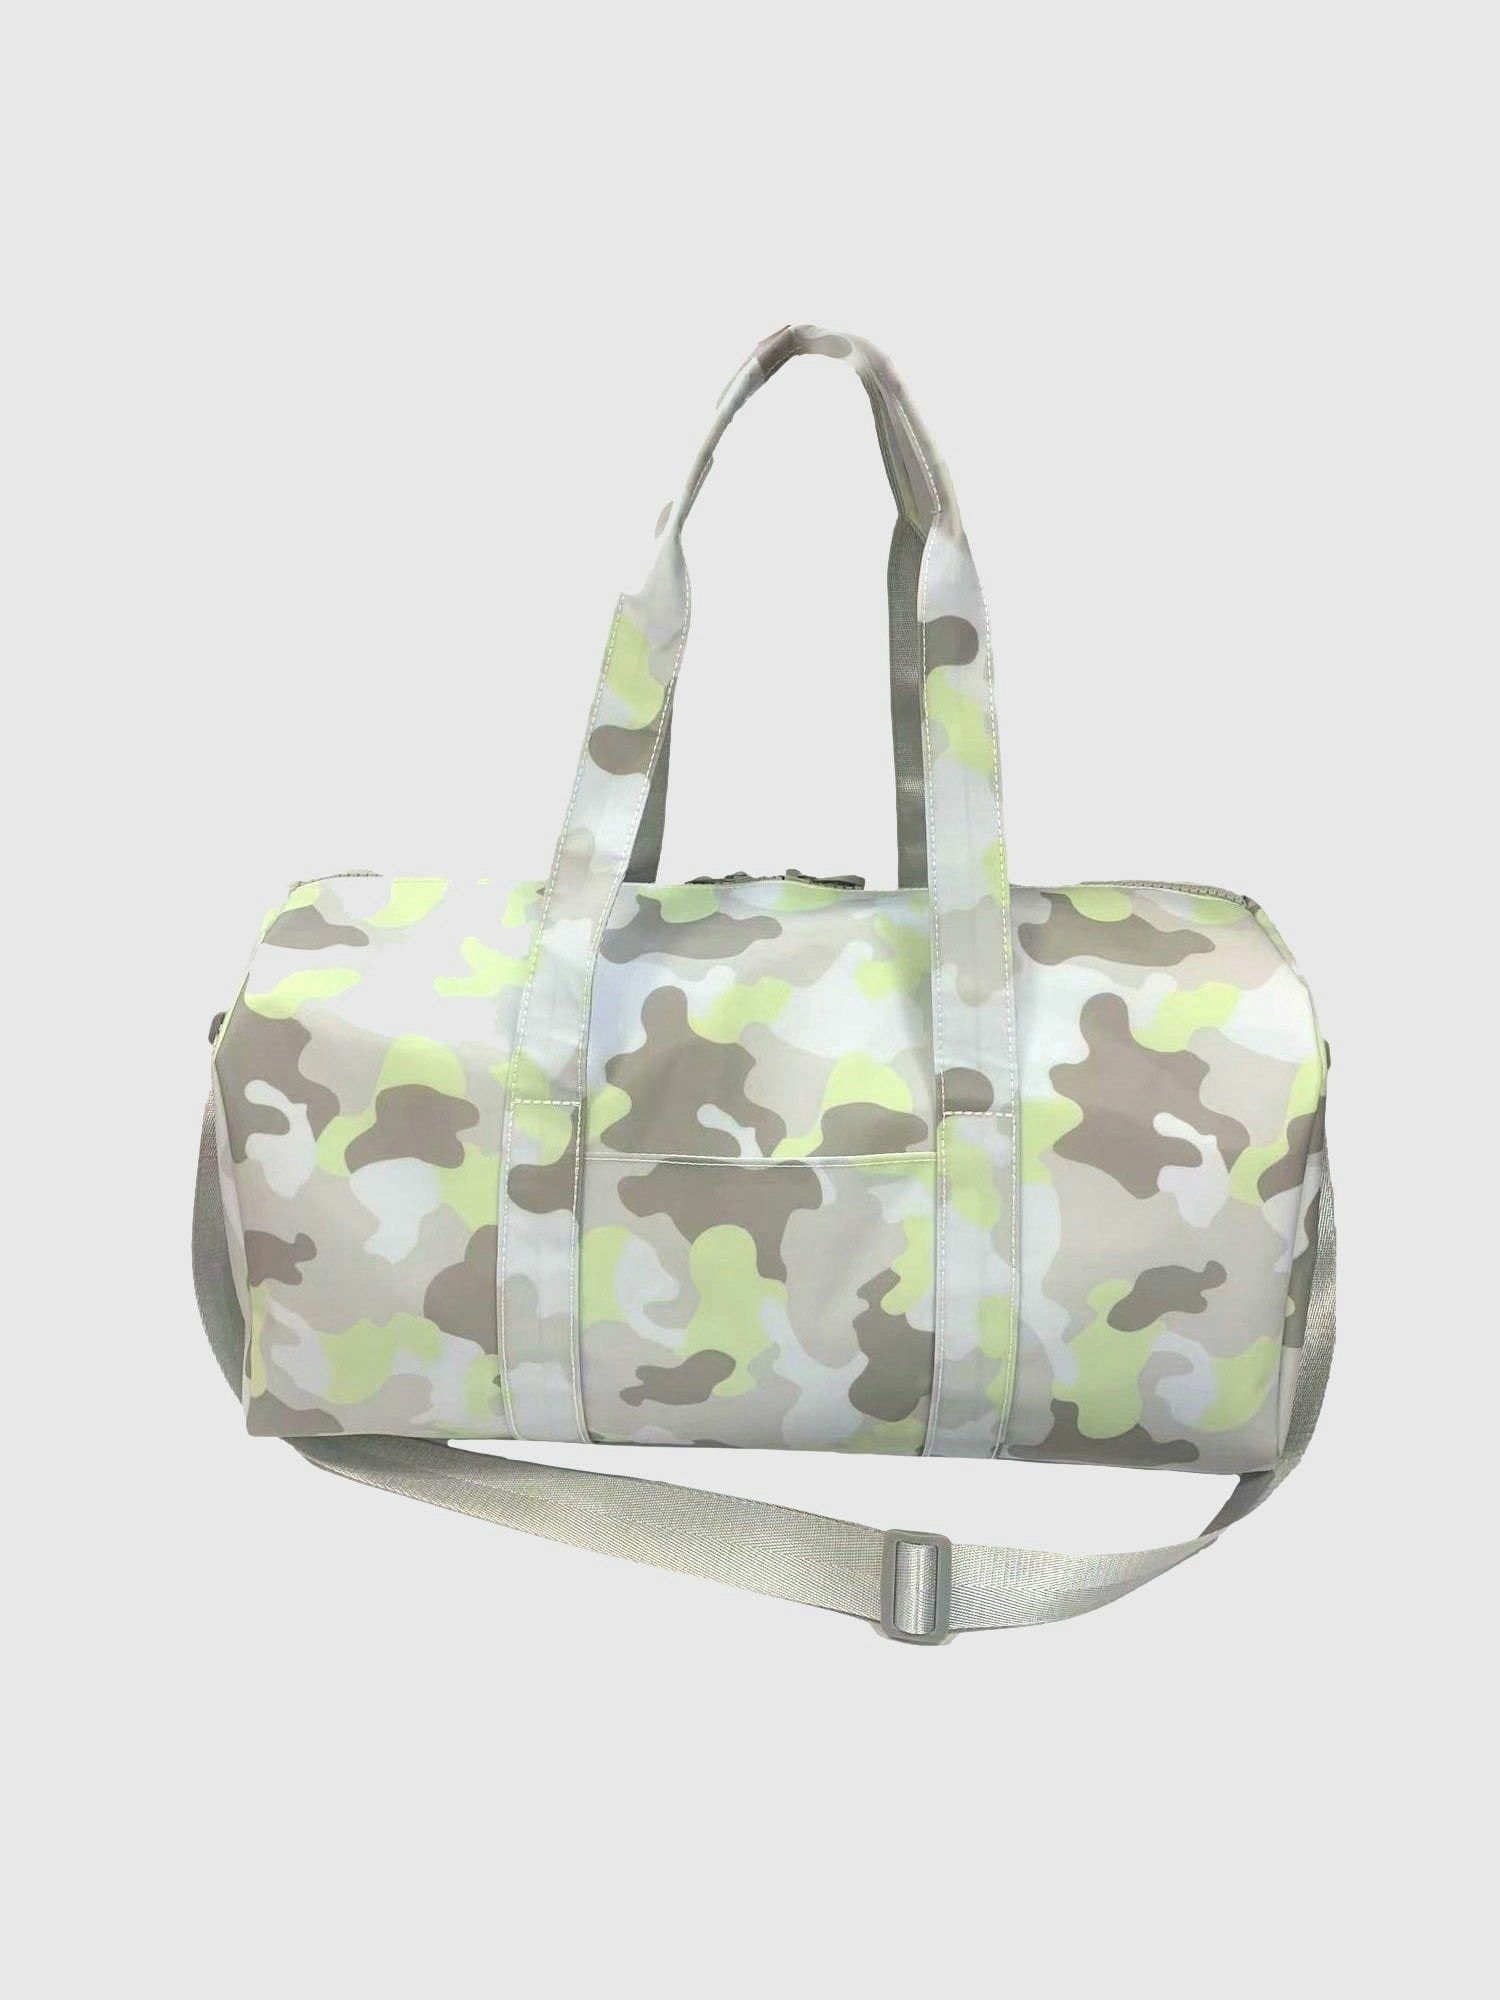 Gap TRVL Design Weekender Duffel Bag